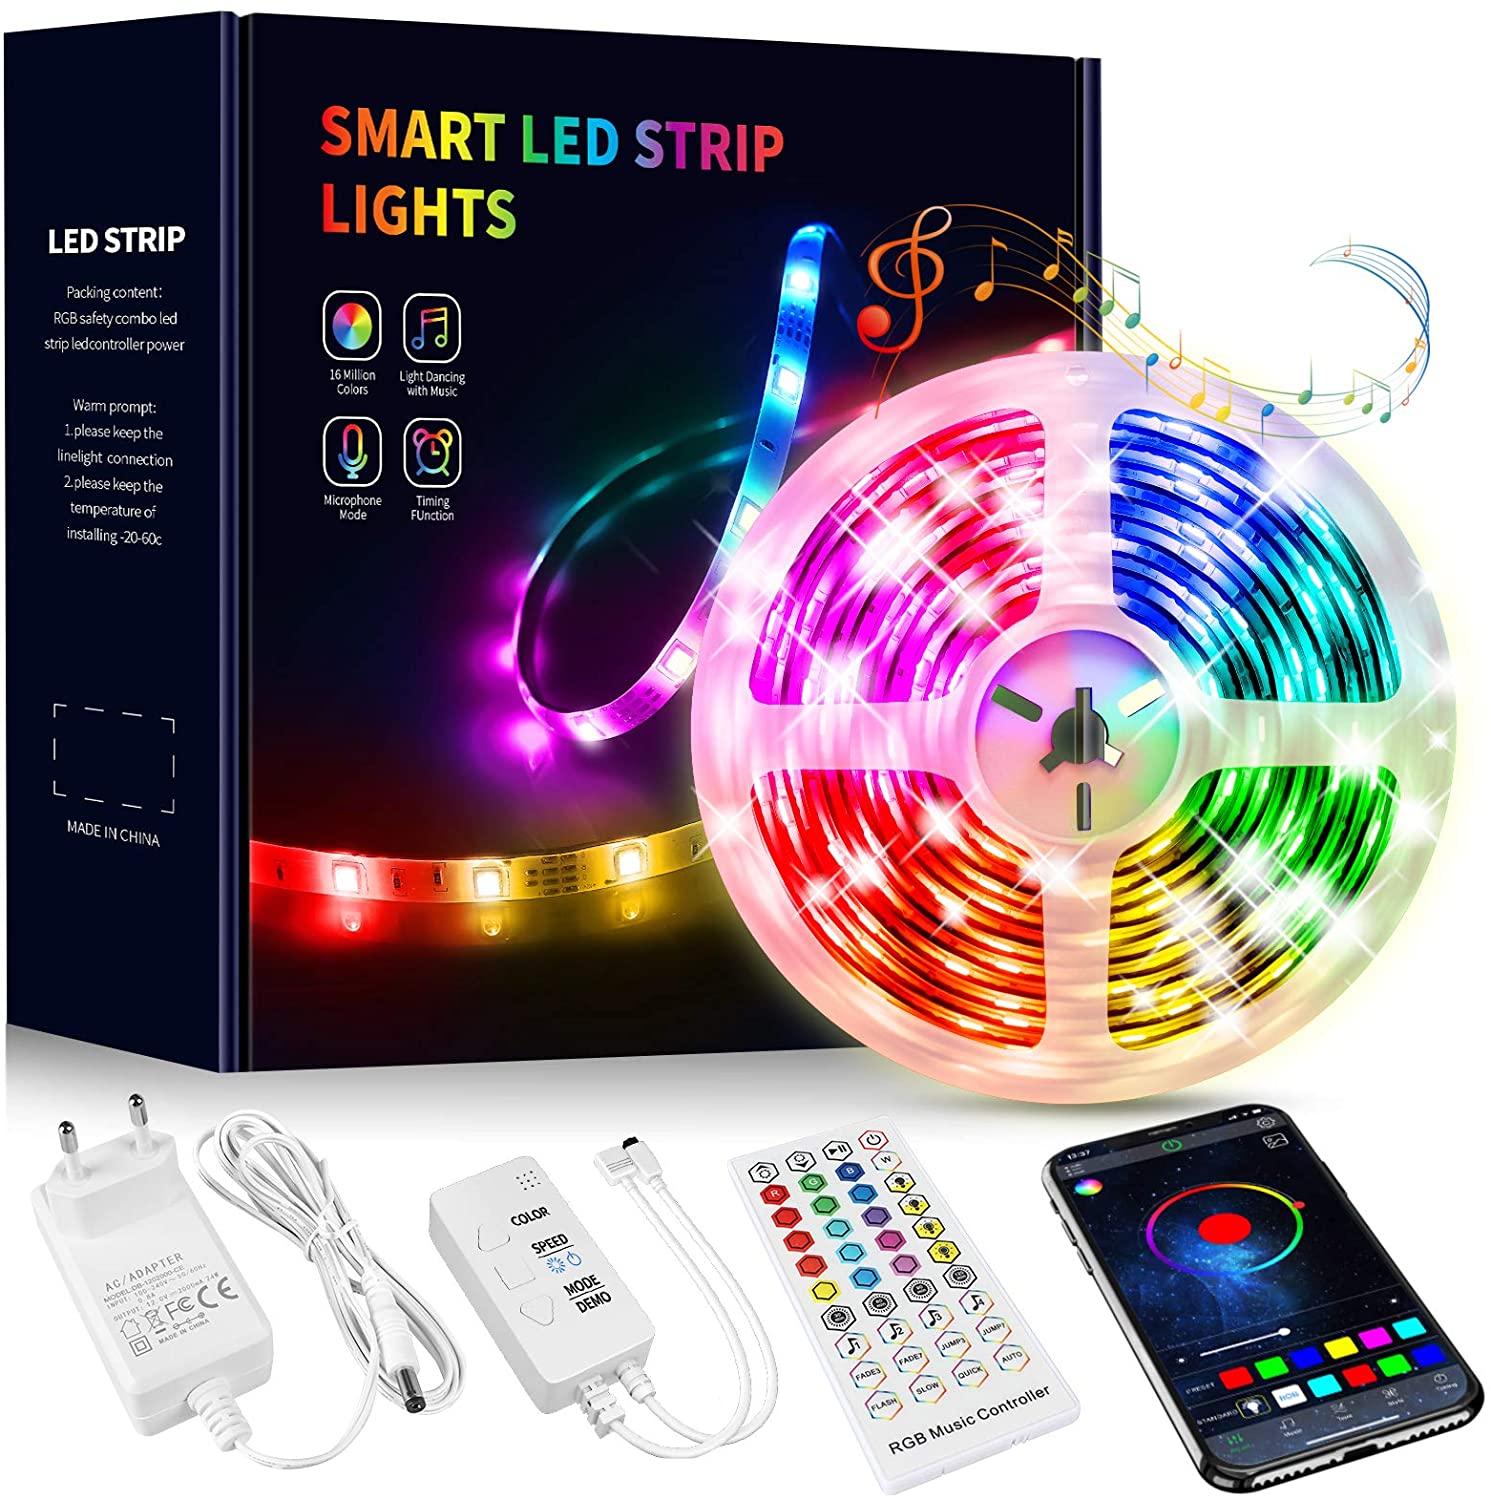 Company’s new product led light strip